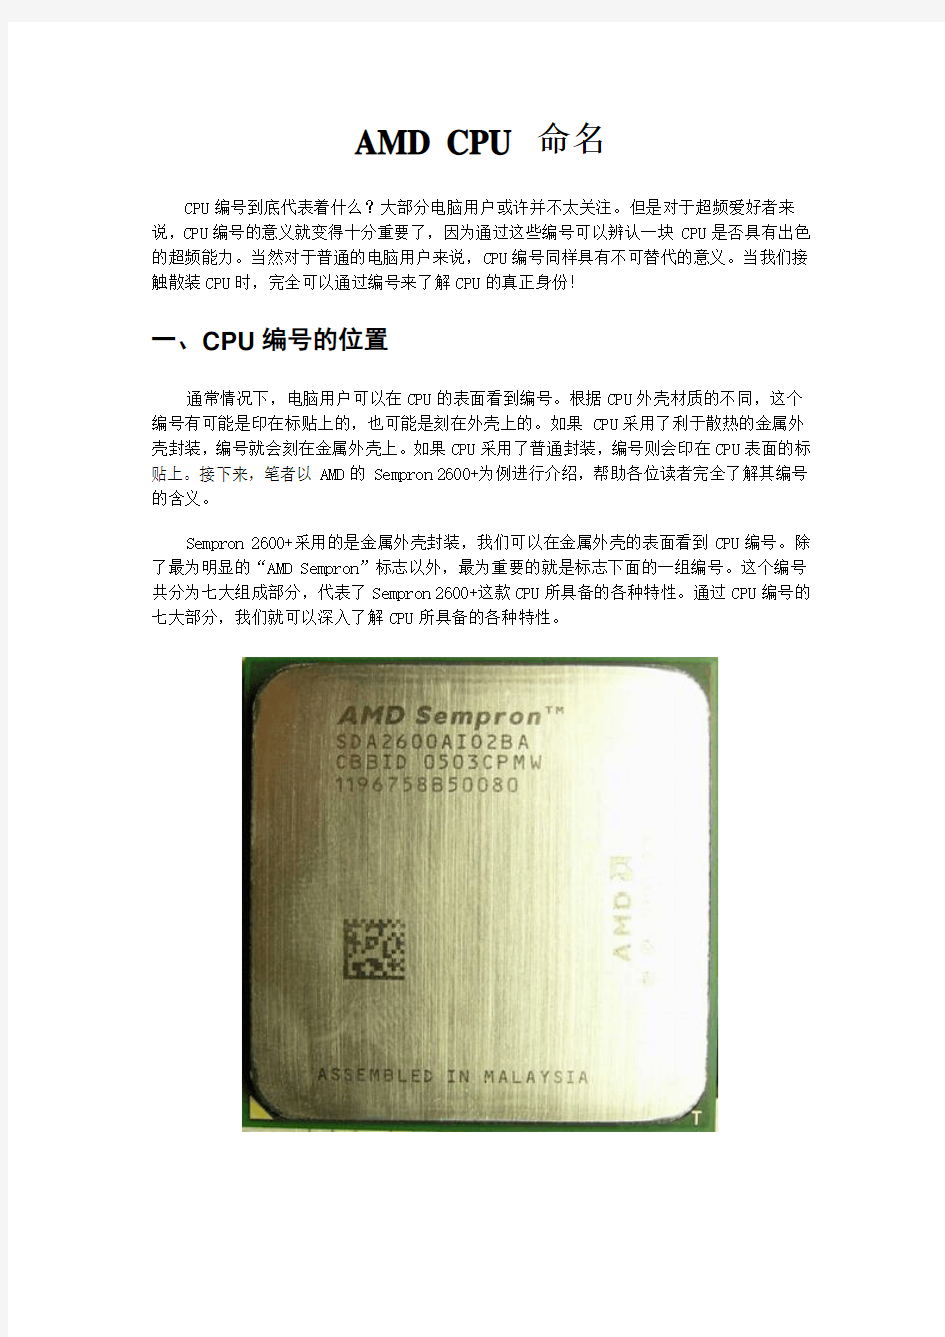 AMD CPU Number